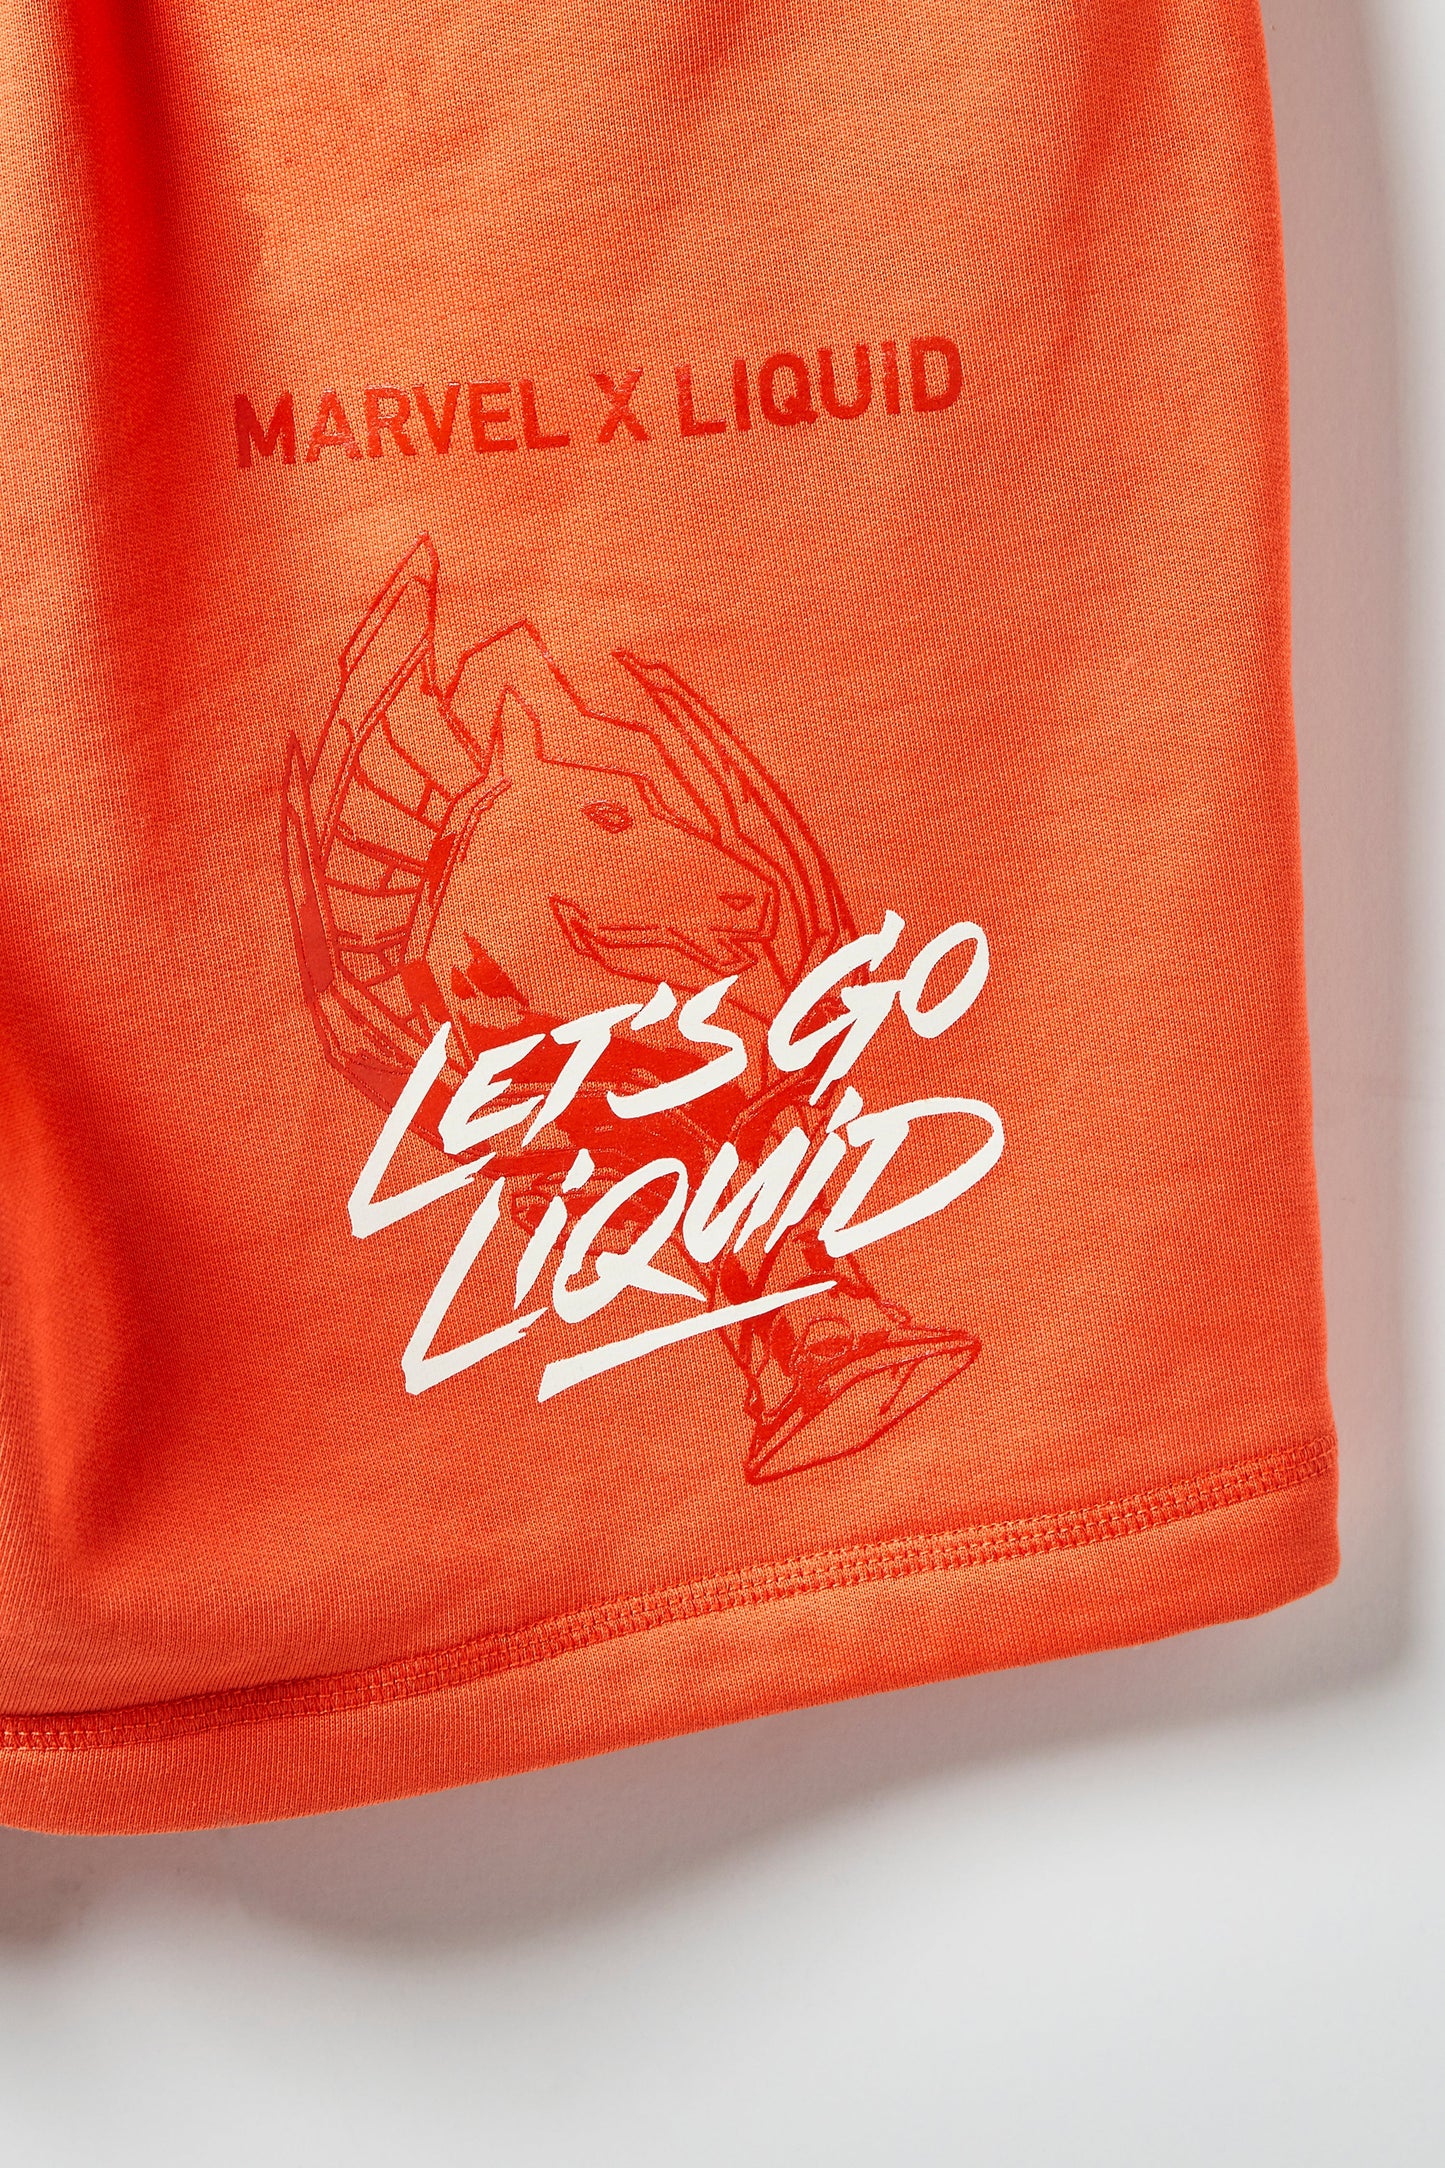 LIQUID X MARVEL MILES MORALES SHORTS - Team Liquid